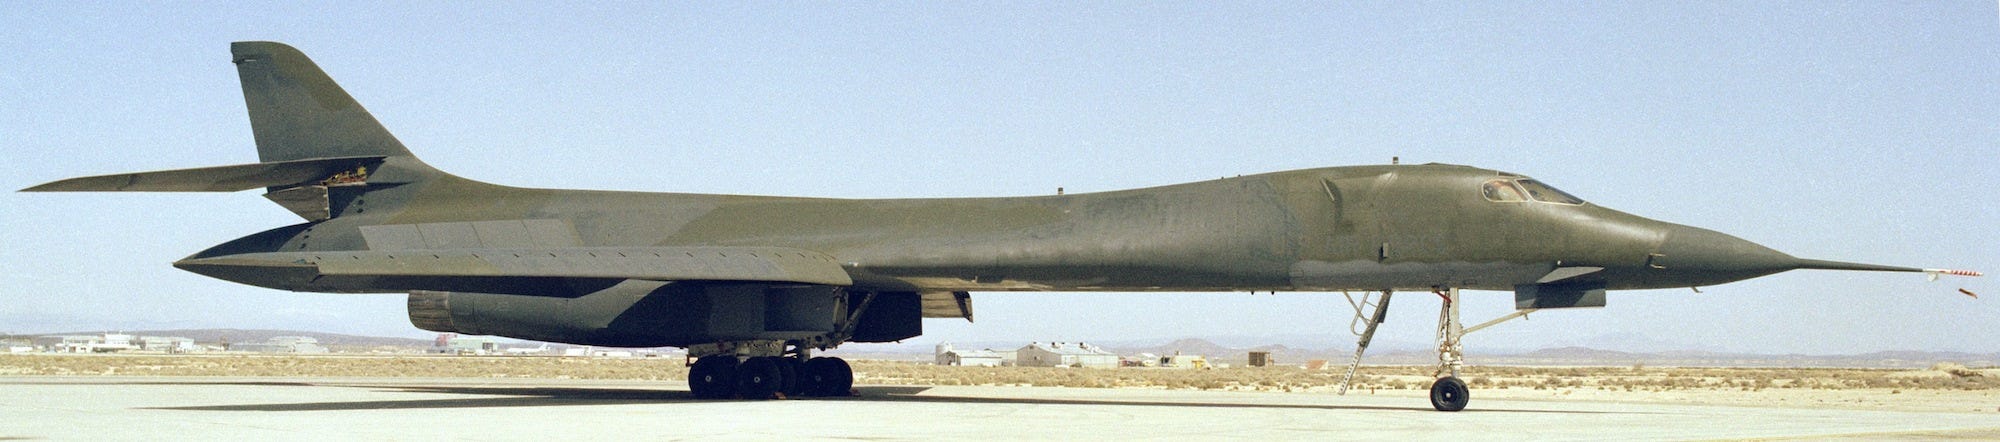 Air Force B-1A Lancer bomber